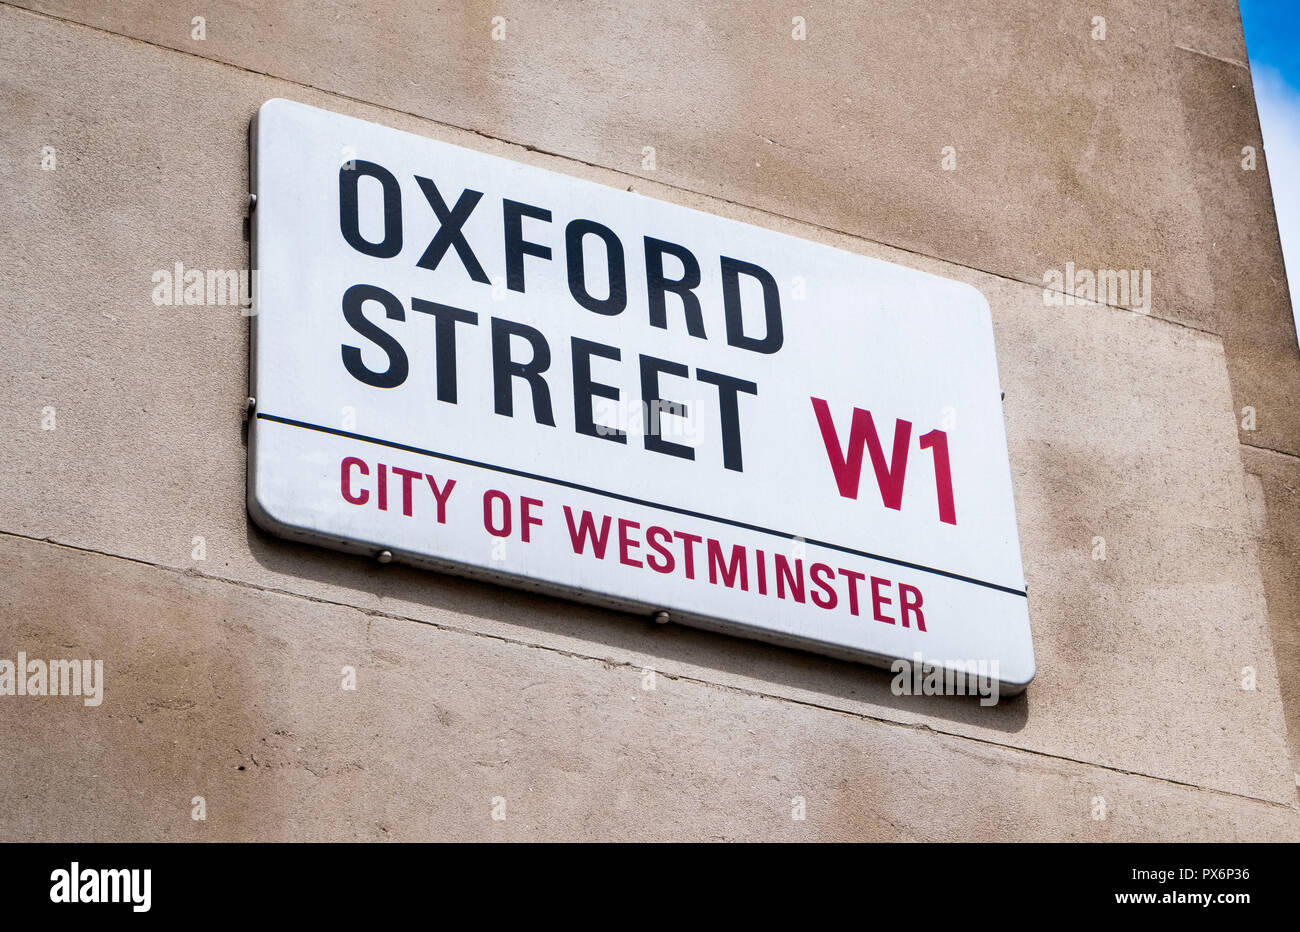 Oxford Street W1 sign, London, England, UK Stock Photo